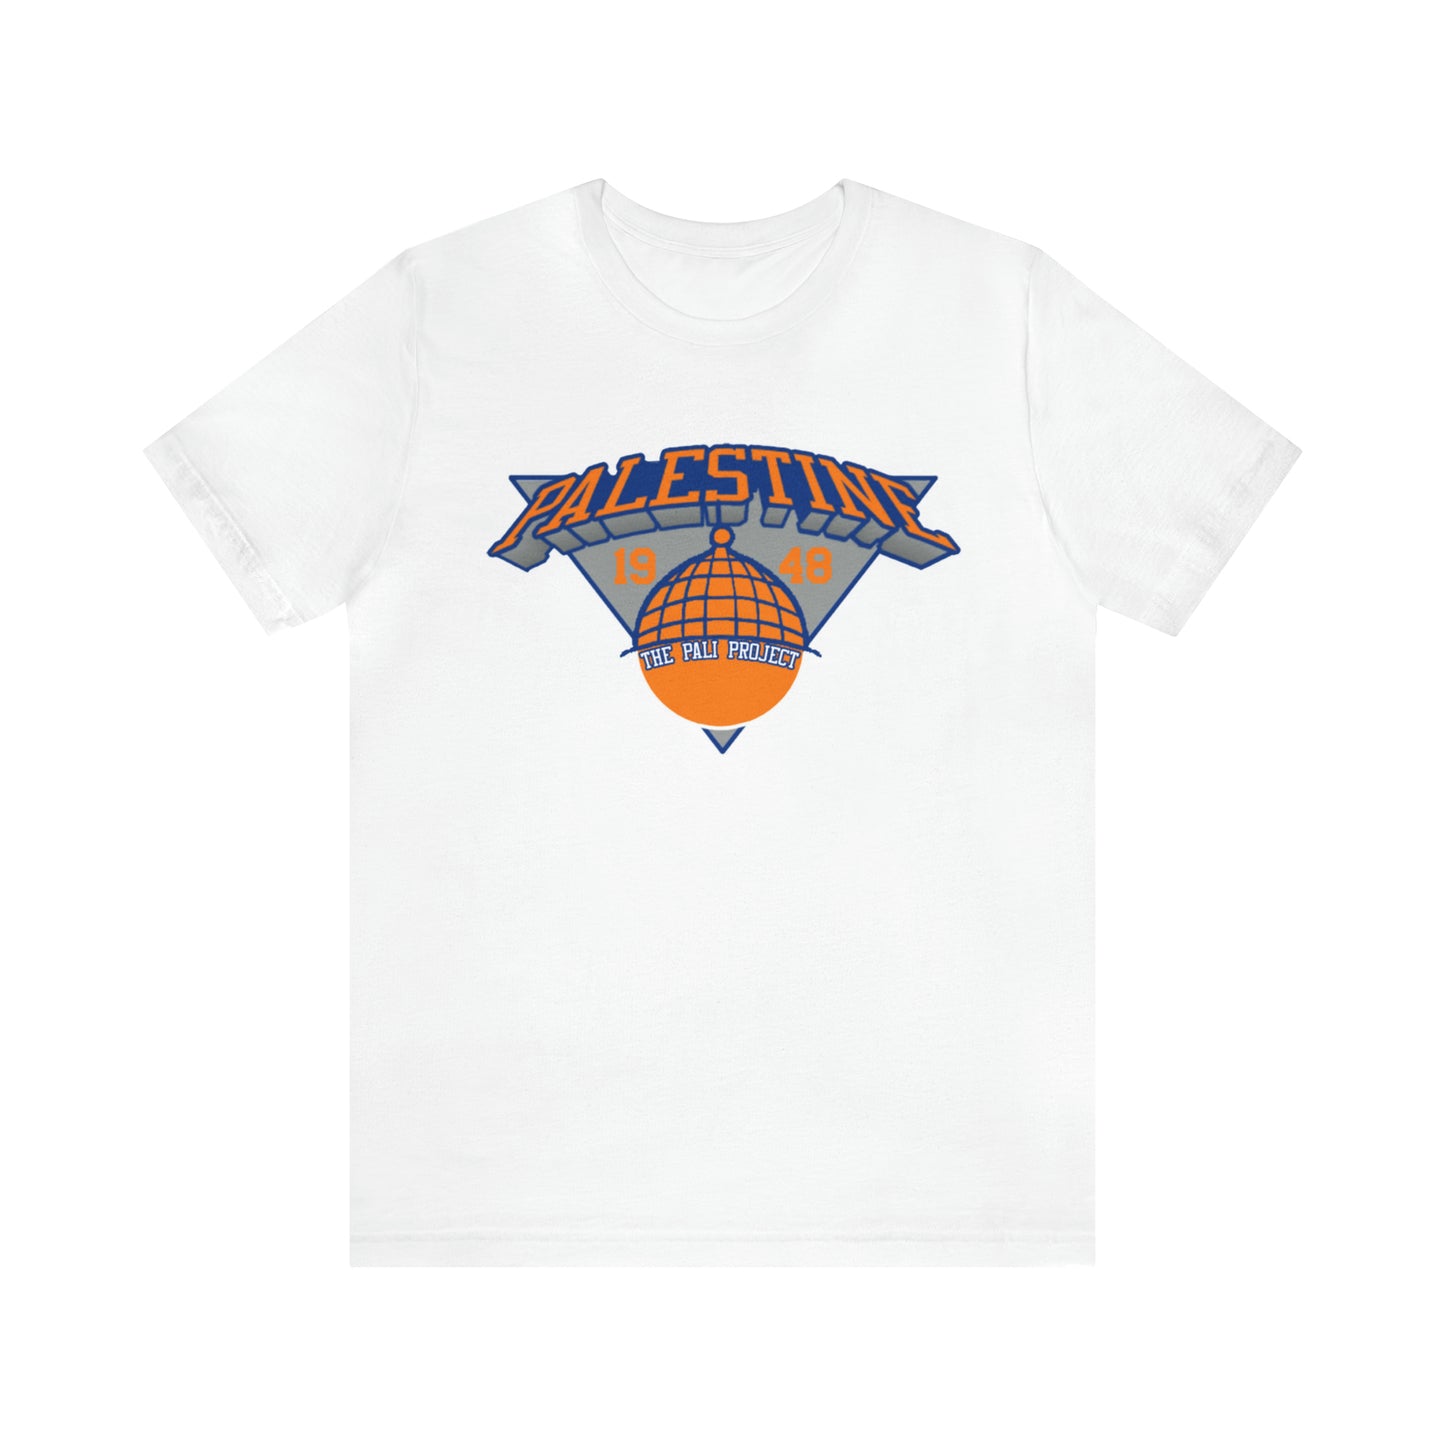 Palestine Knicks T Shirt